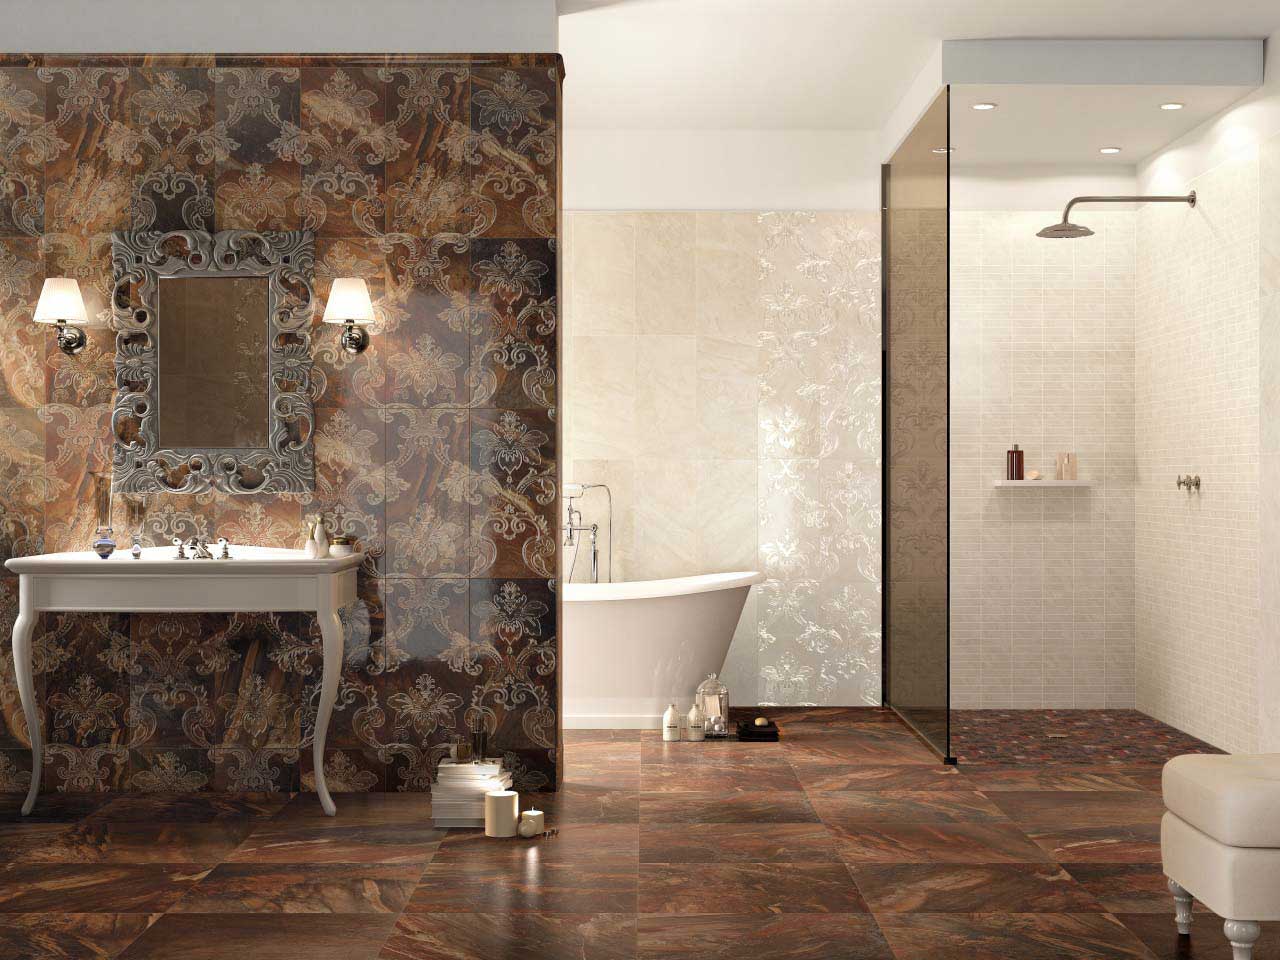 A bathroom with beautiful tiled walls and a bathtub.